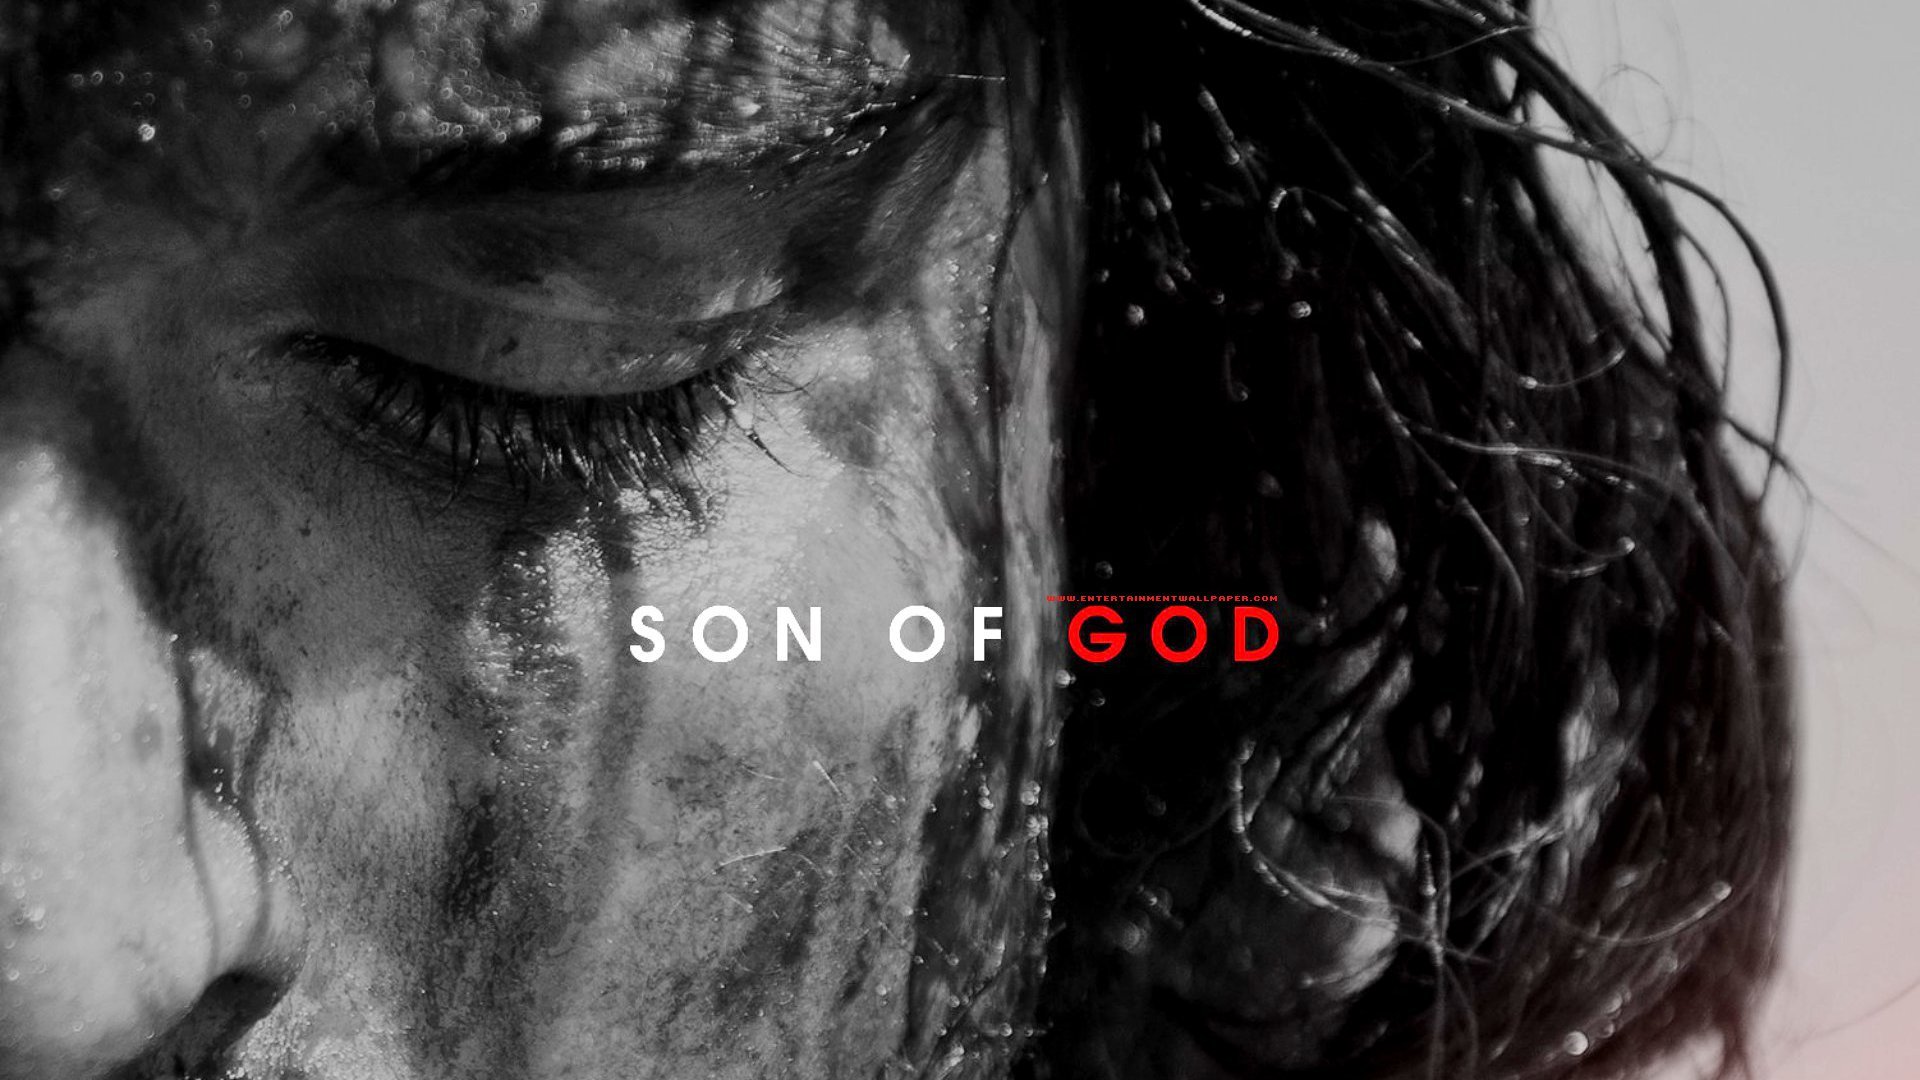 son of god, Drama, Religion, Movie, Film, Christian, God, Son, Jesus, Poster Wallpaper